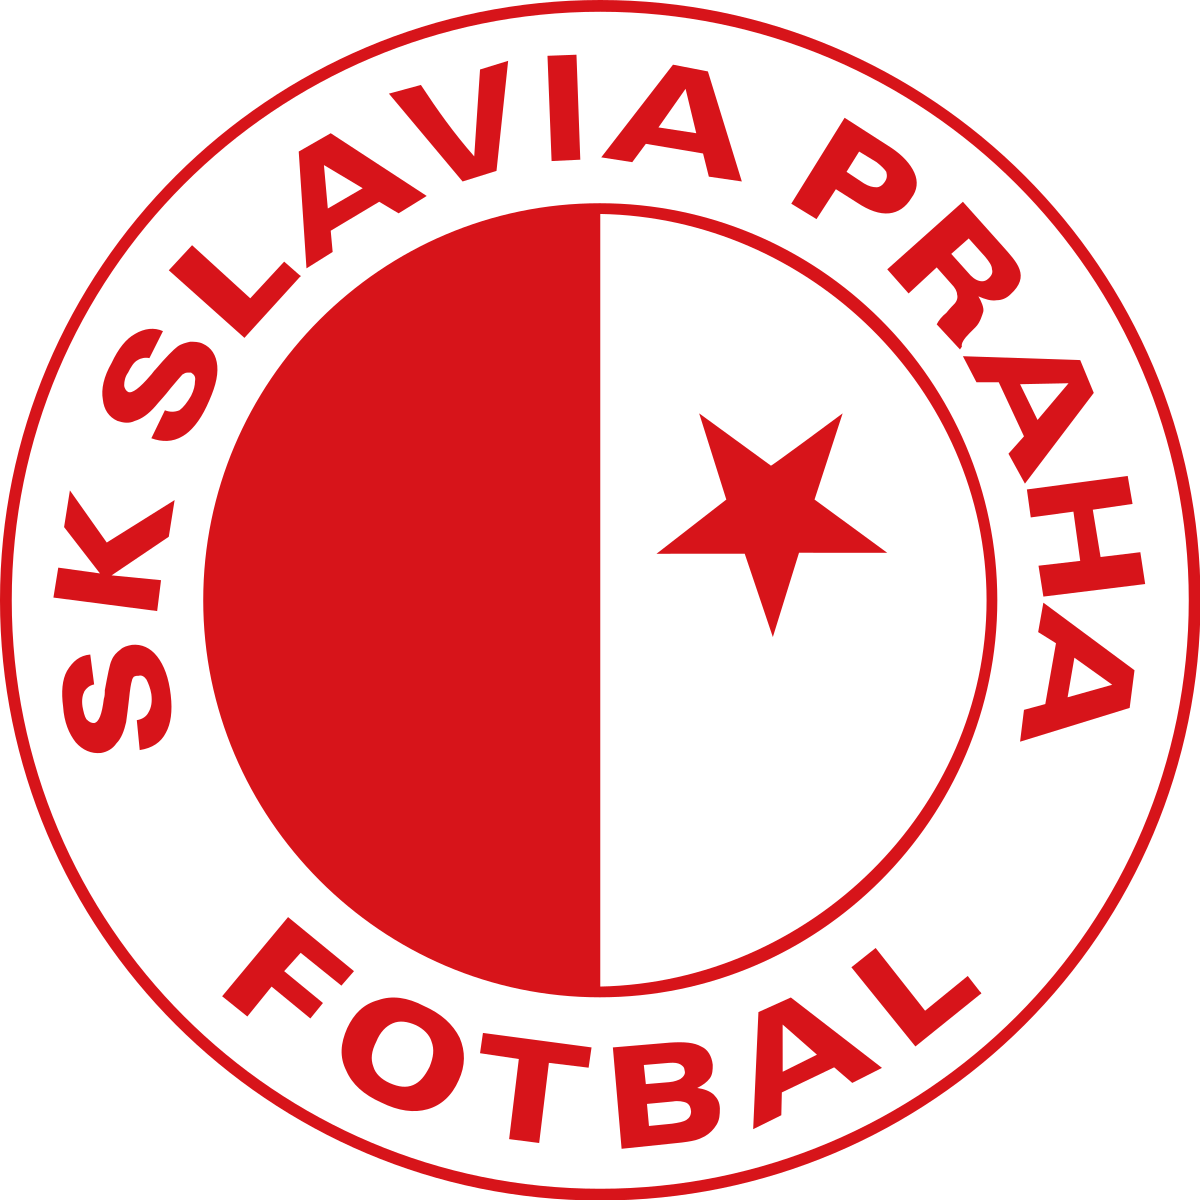 SK Slavia Prague v AD Polisportiva Valverde (w)